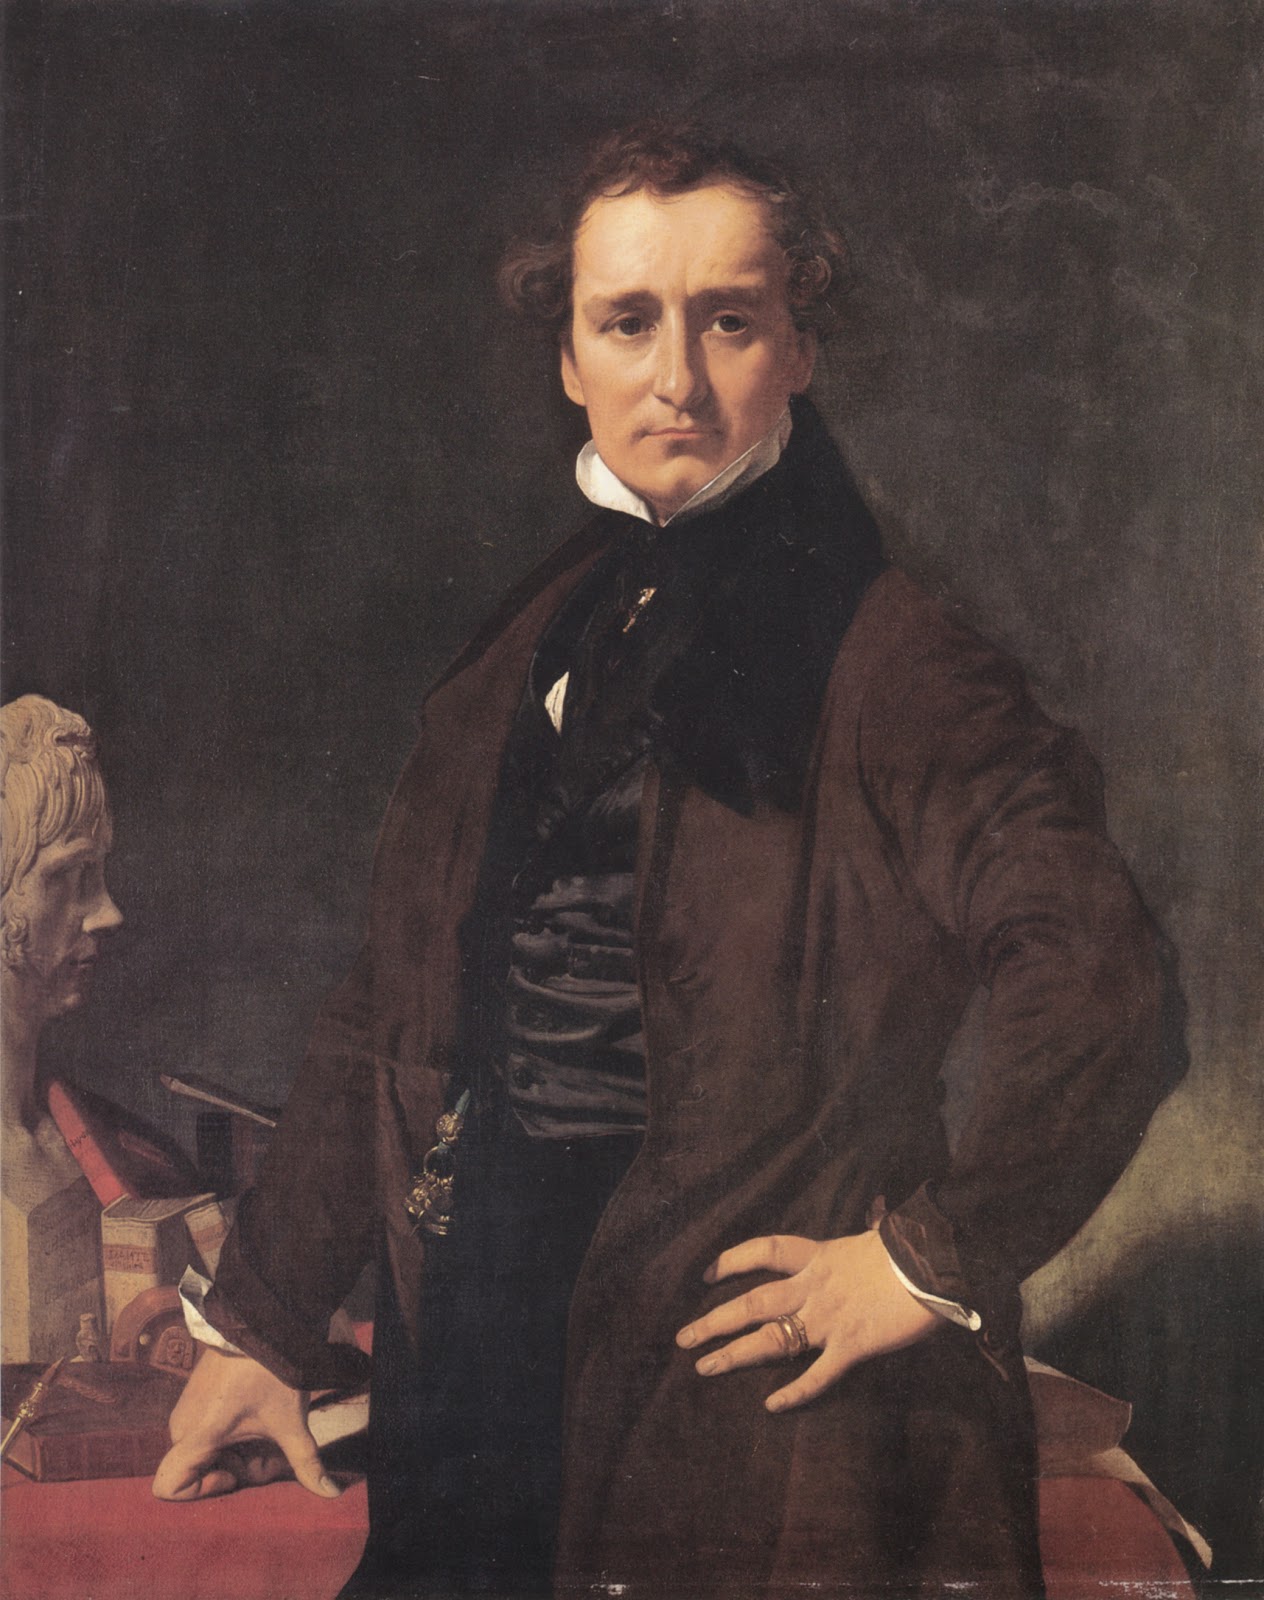 Jean+Auguste+Dominique+Ingres-1780-1867 (159).jpg